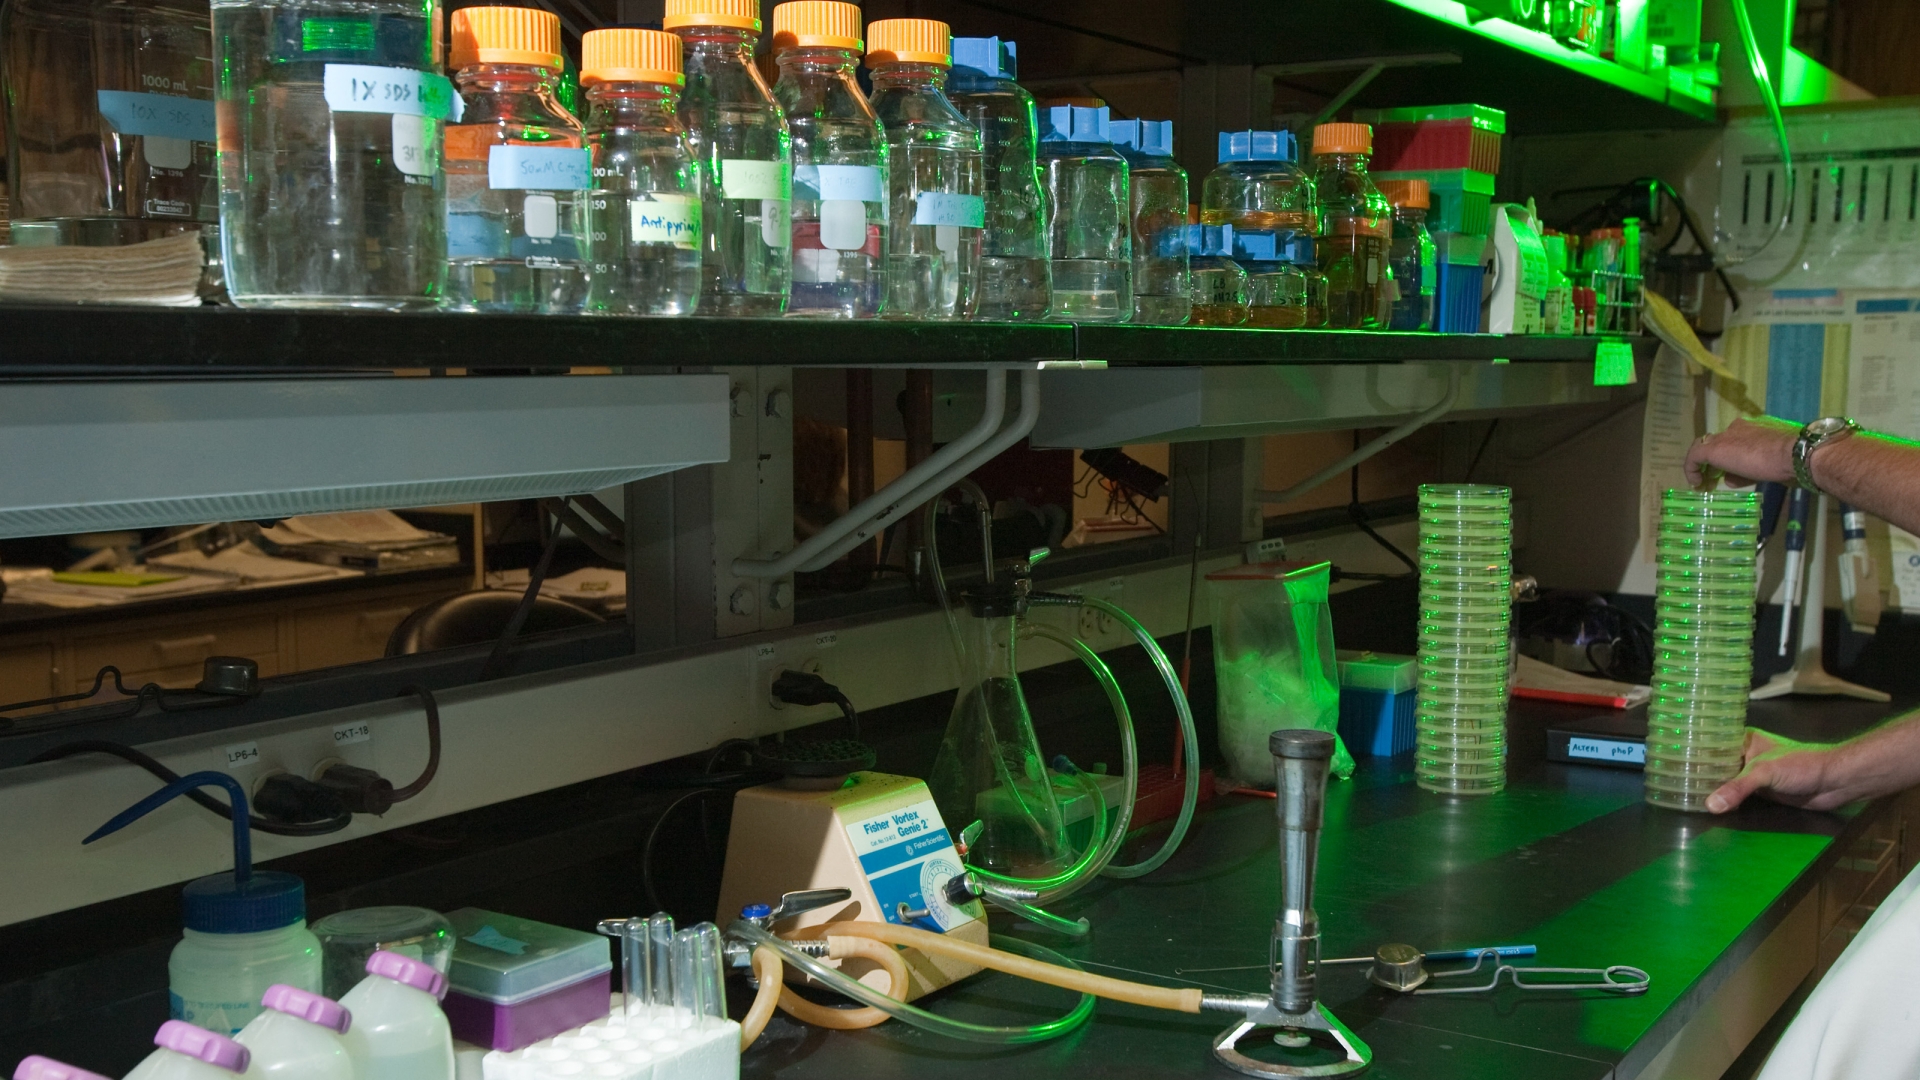 Counter in lab showing lab equipment under greenish glow